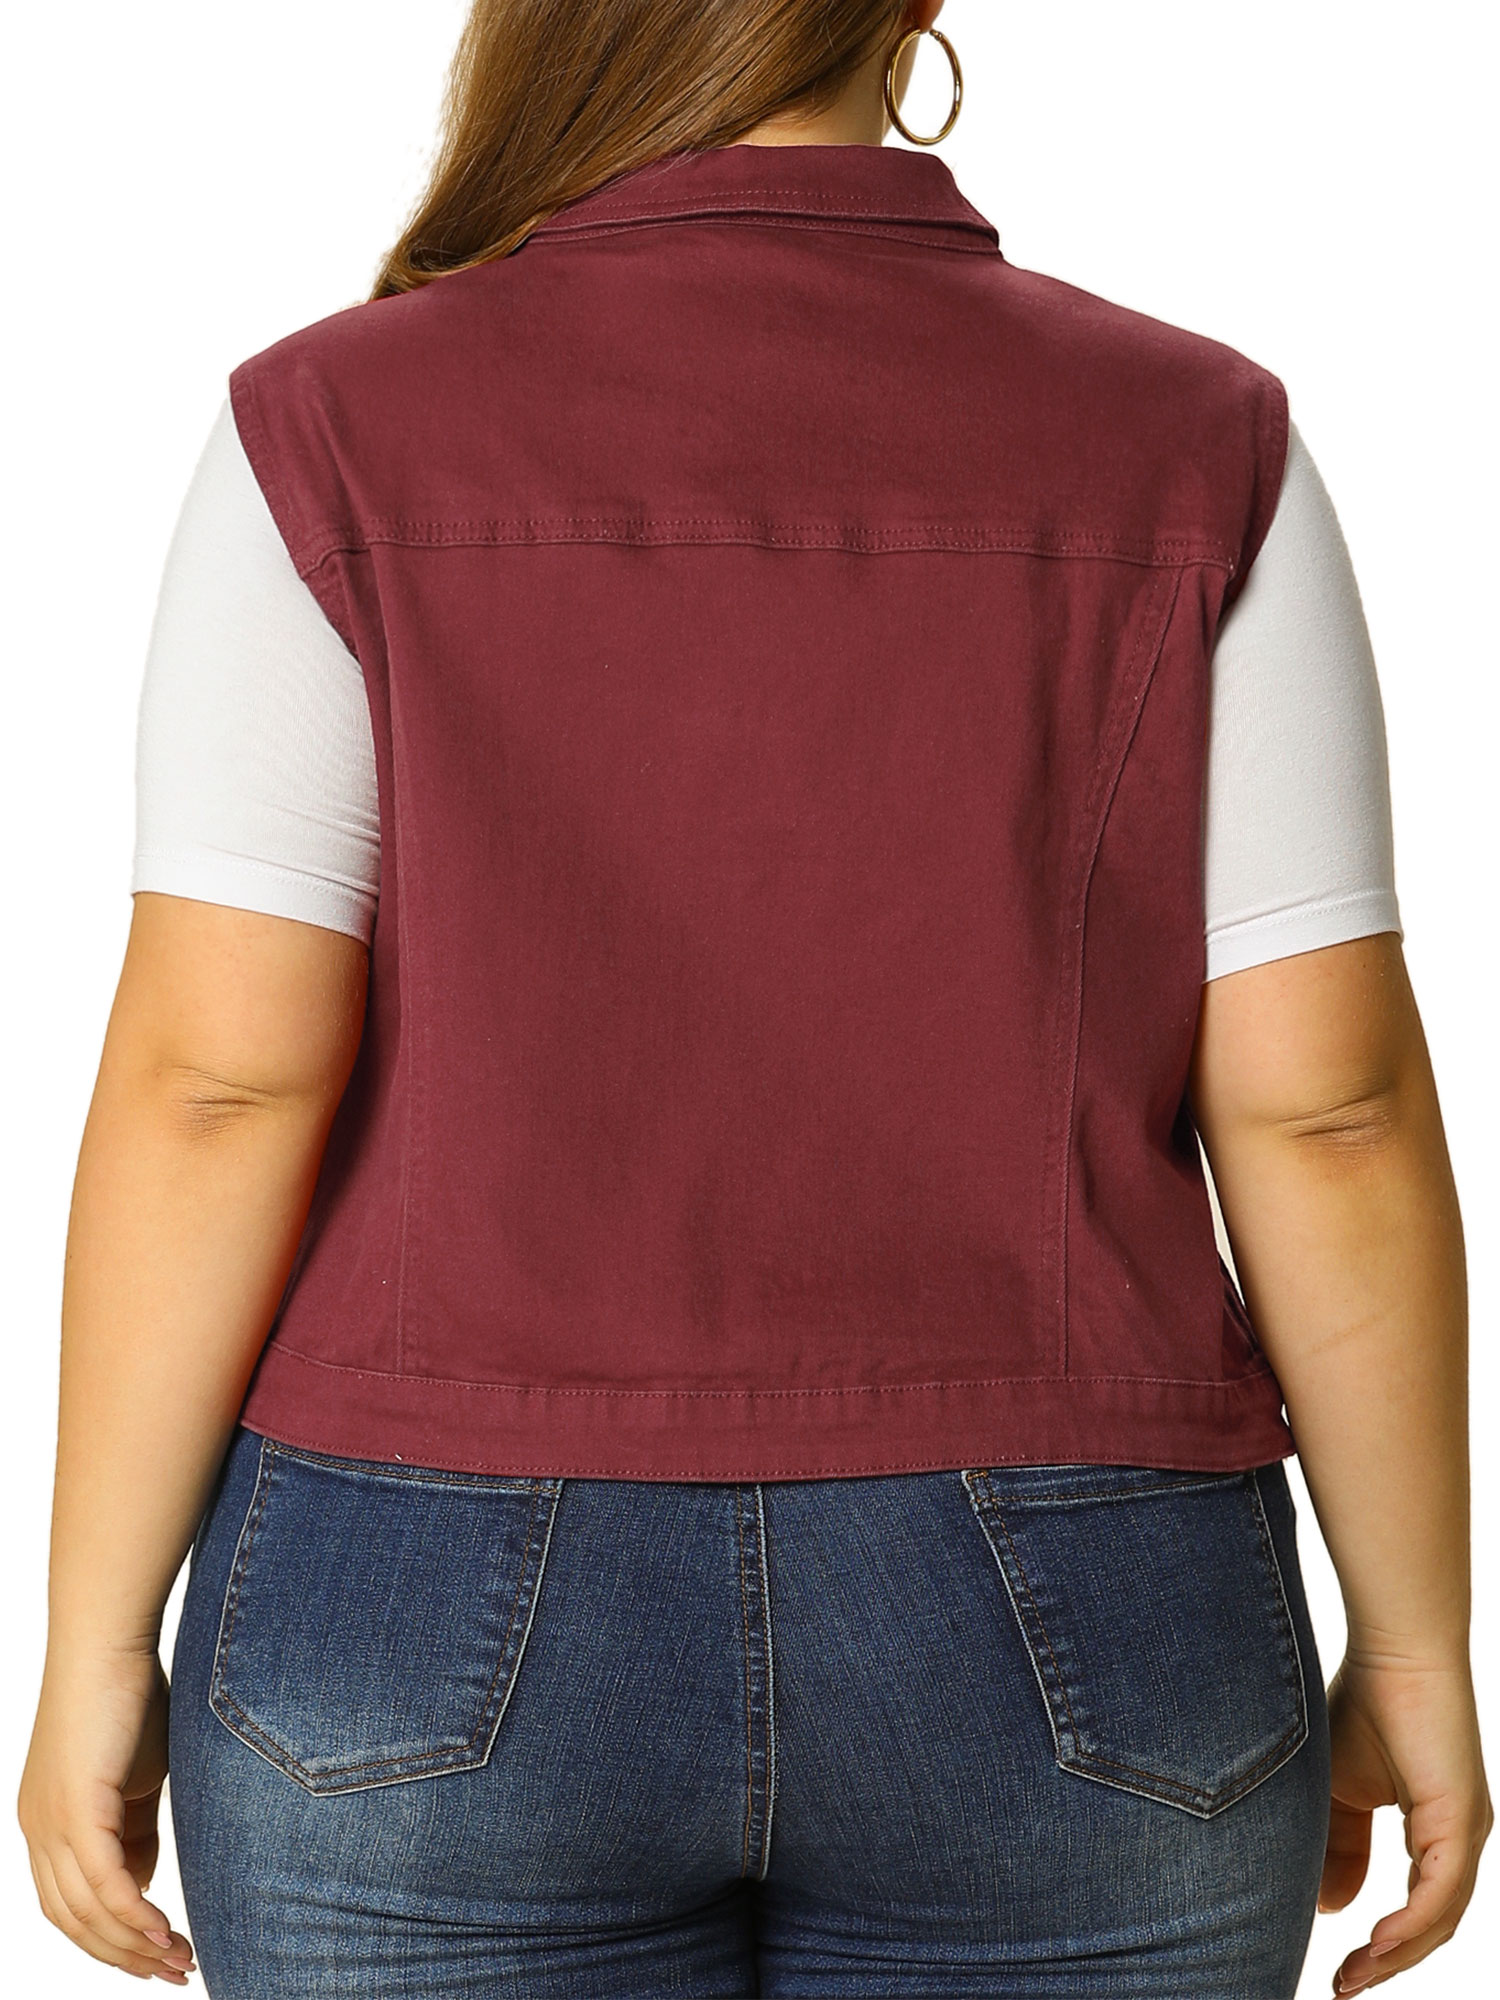 Agnes Orinda Women's Plus Size Casual Button Sleeveless Denim Vest Jacket - image 4 of 7